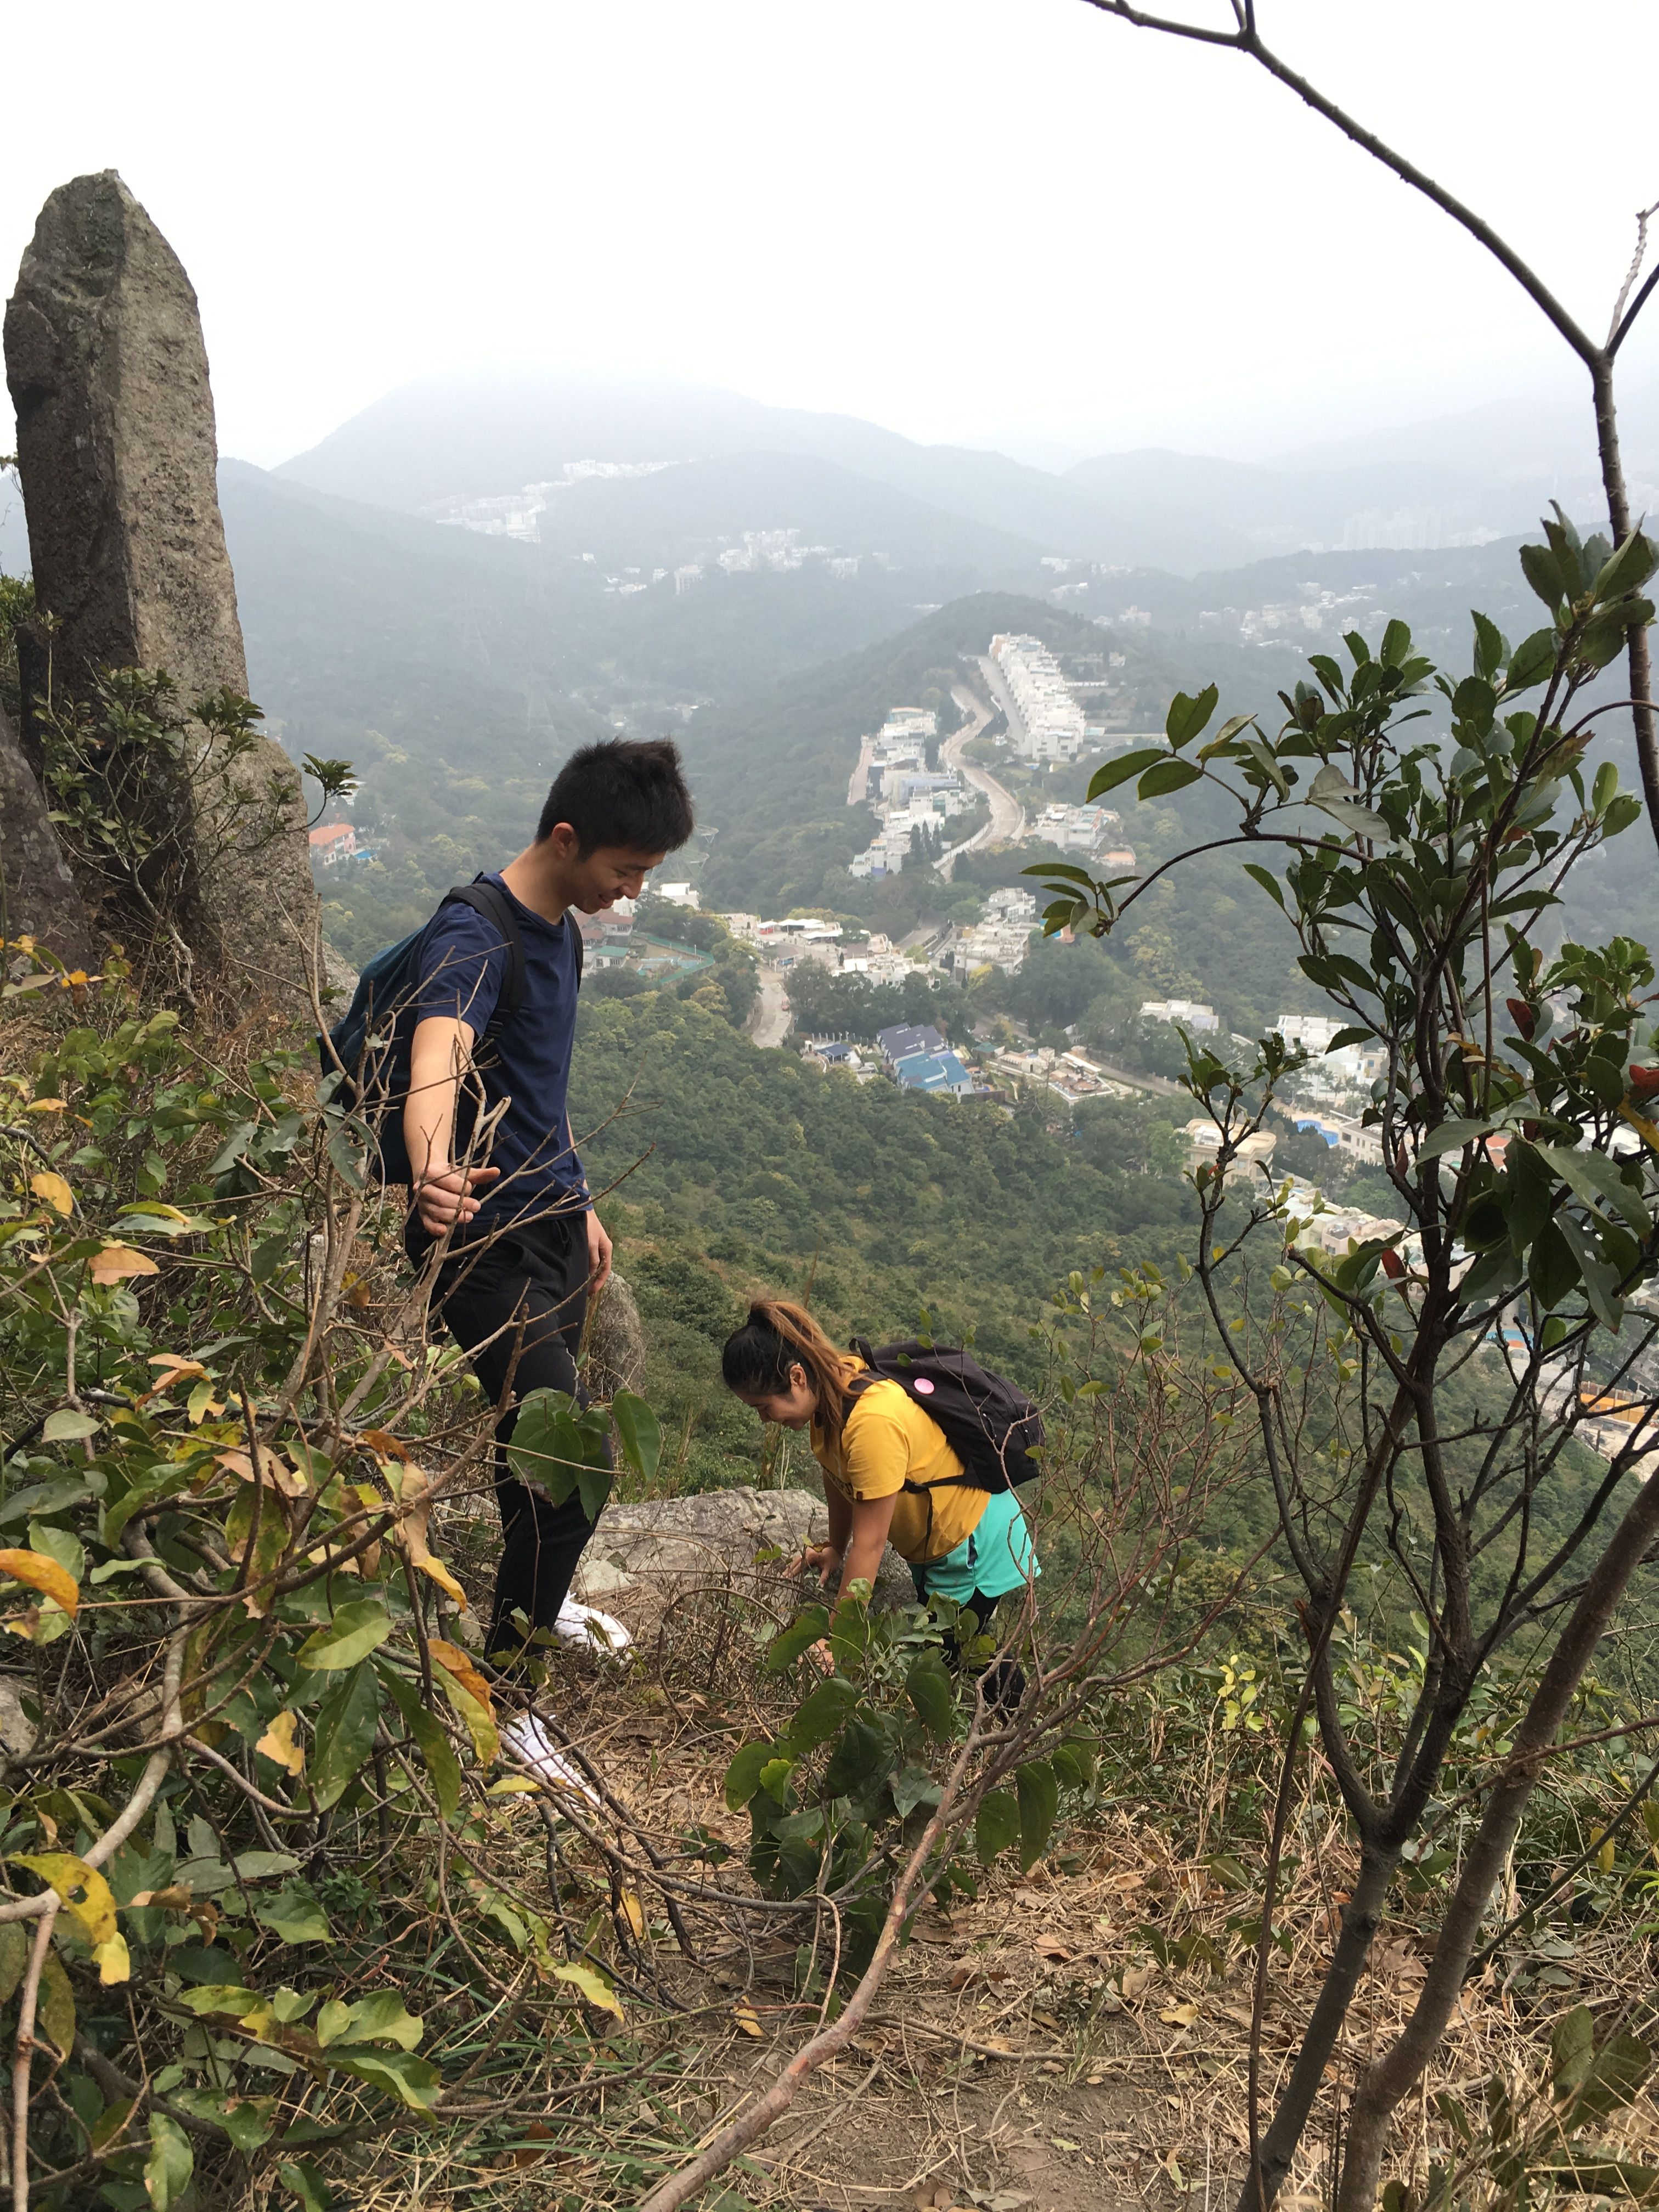 Hiking Day on Kowloon Peak